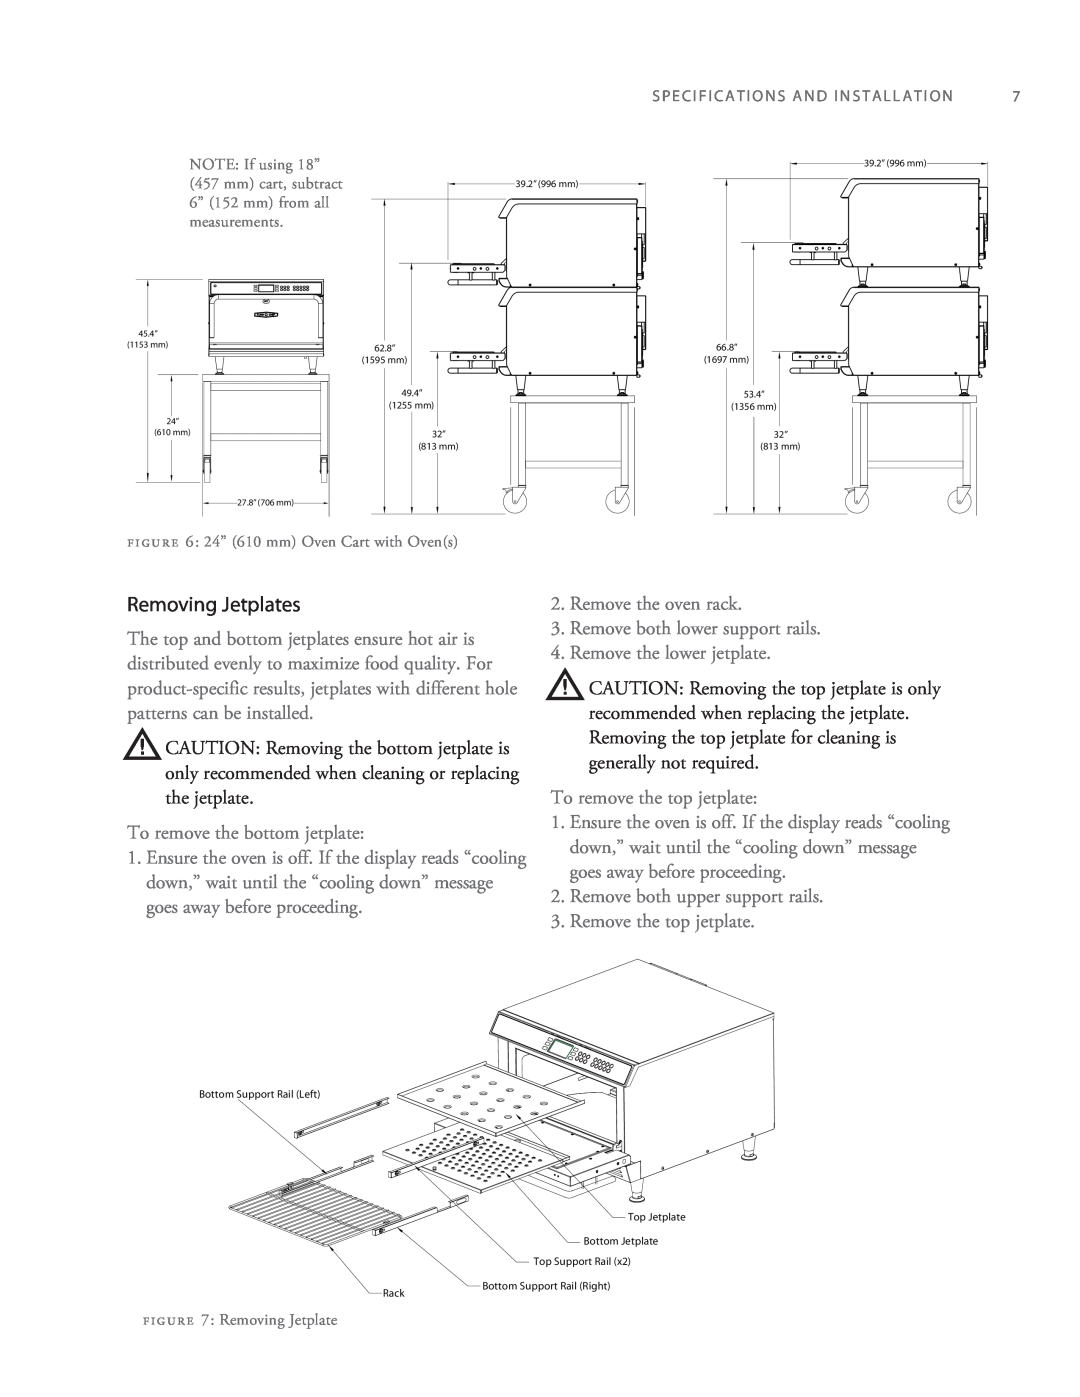 Turbo Chef Technologies 2TM manual Removing Jetplates 